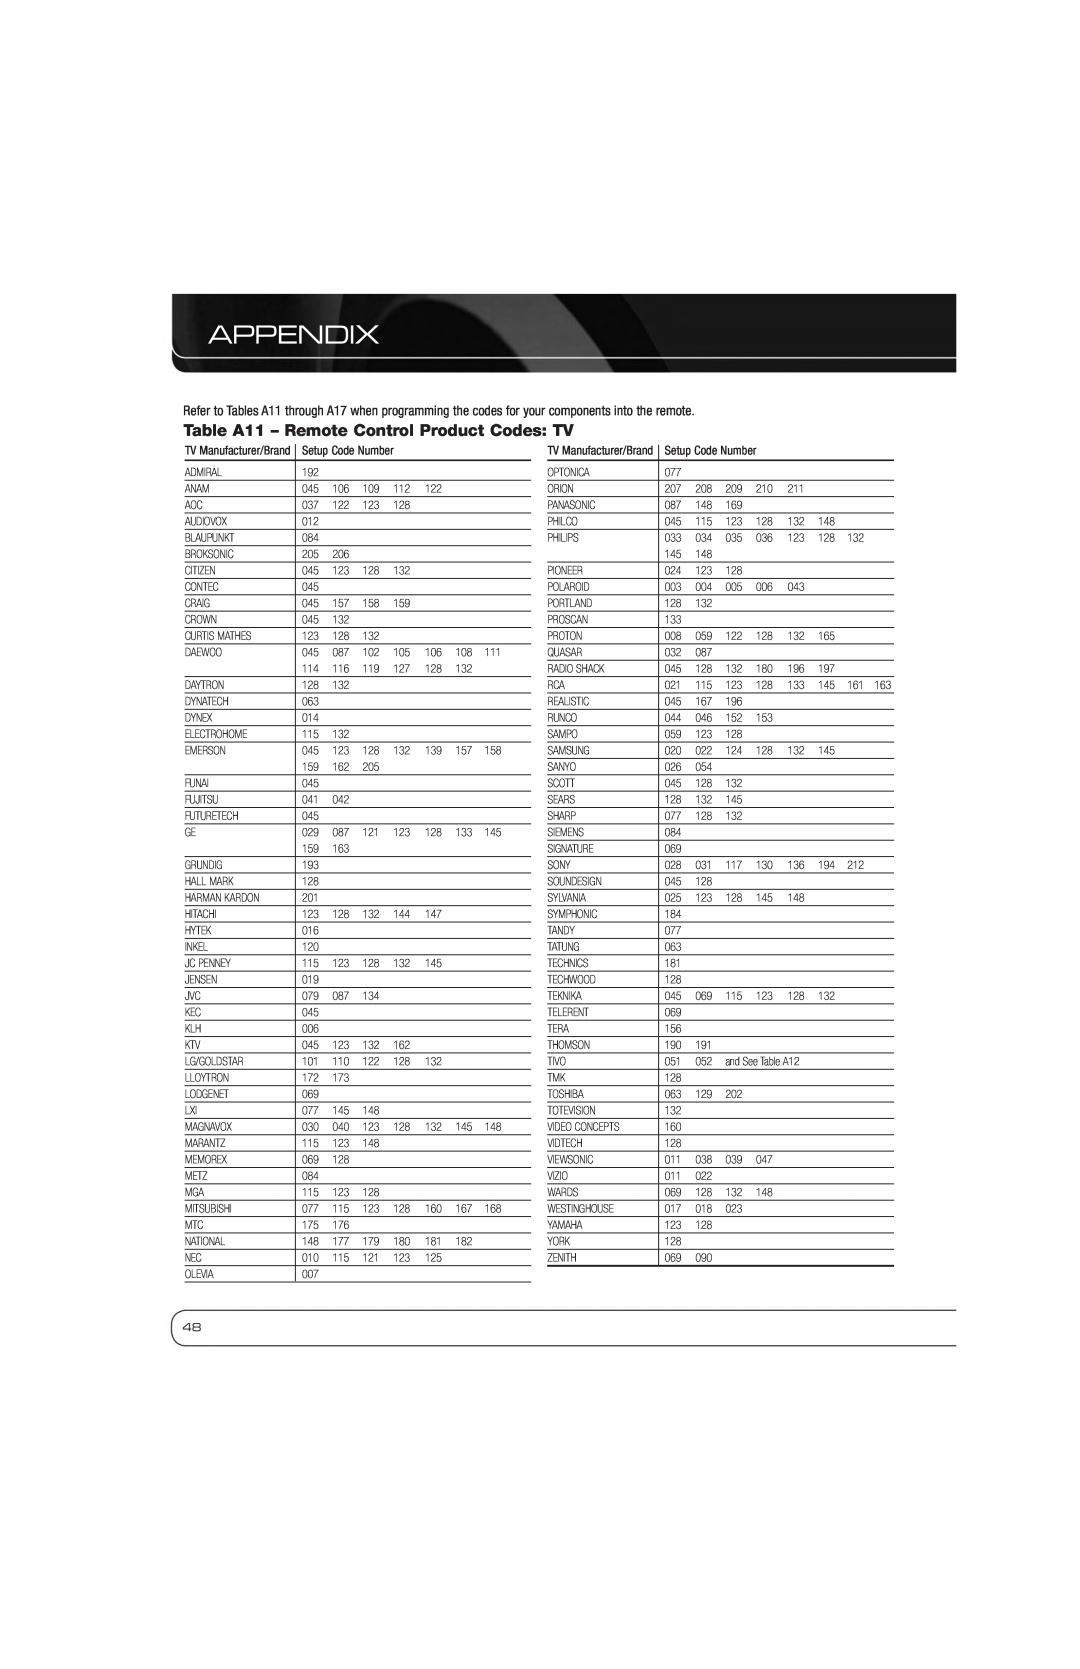 Harman-Kardon AVR 1600 owner manual Table A11 - Remote Control Product Codes TV, Appendix 